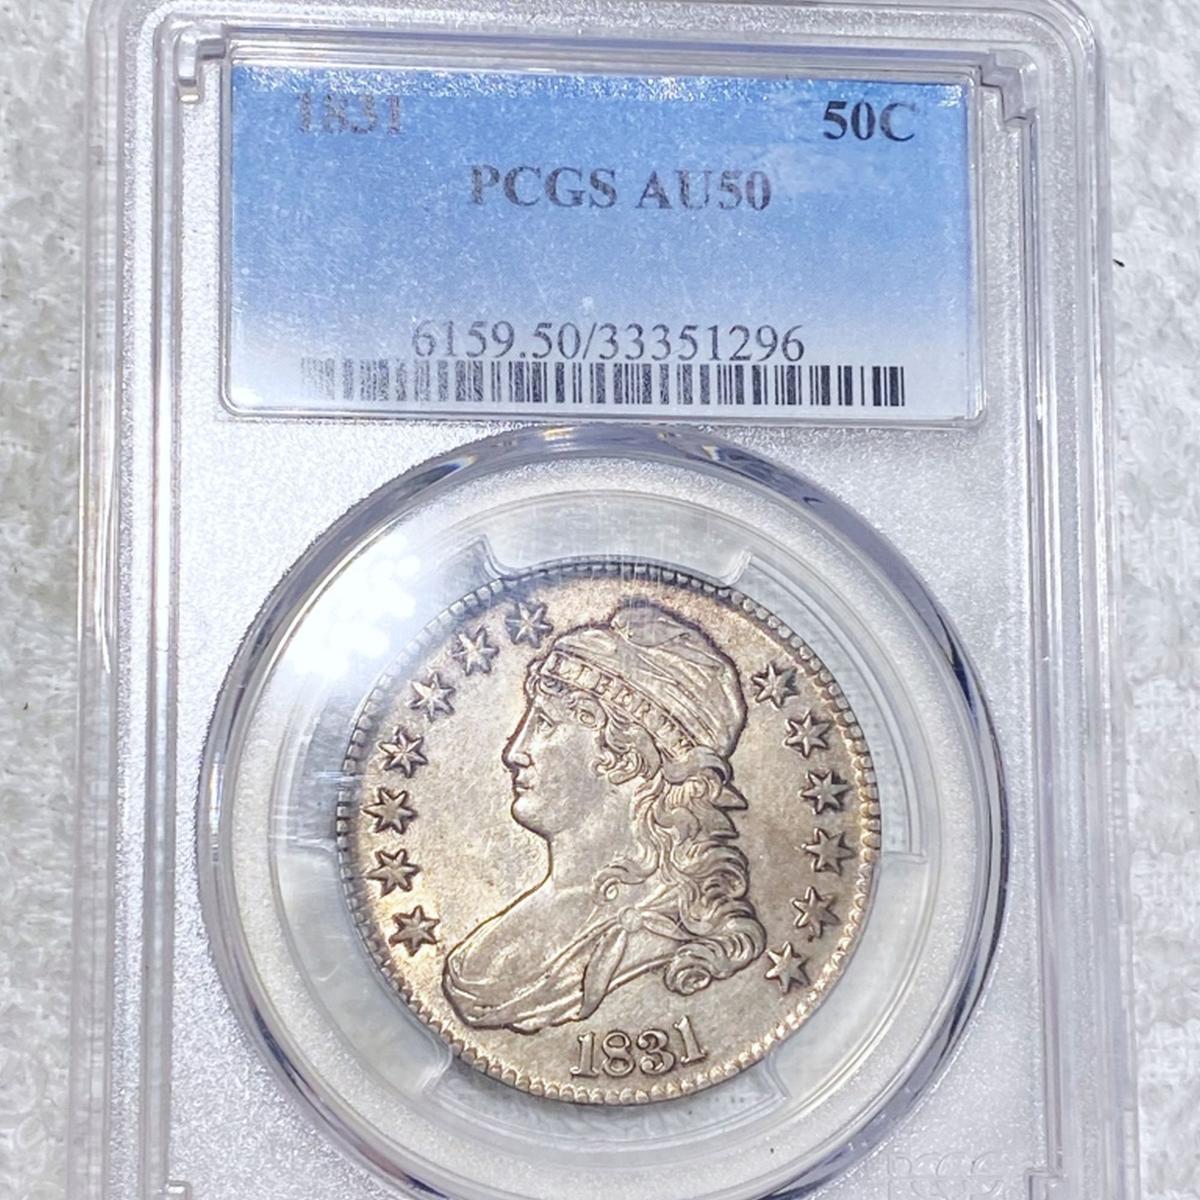 1831 Capped Bust Half Dollar PCGS - AU50